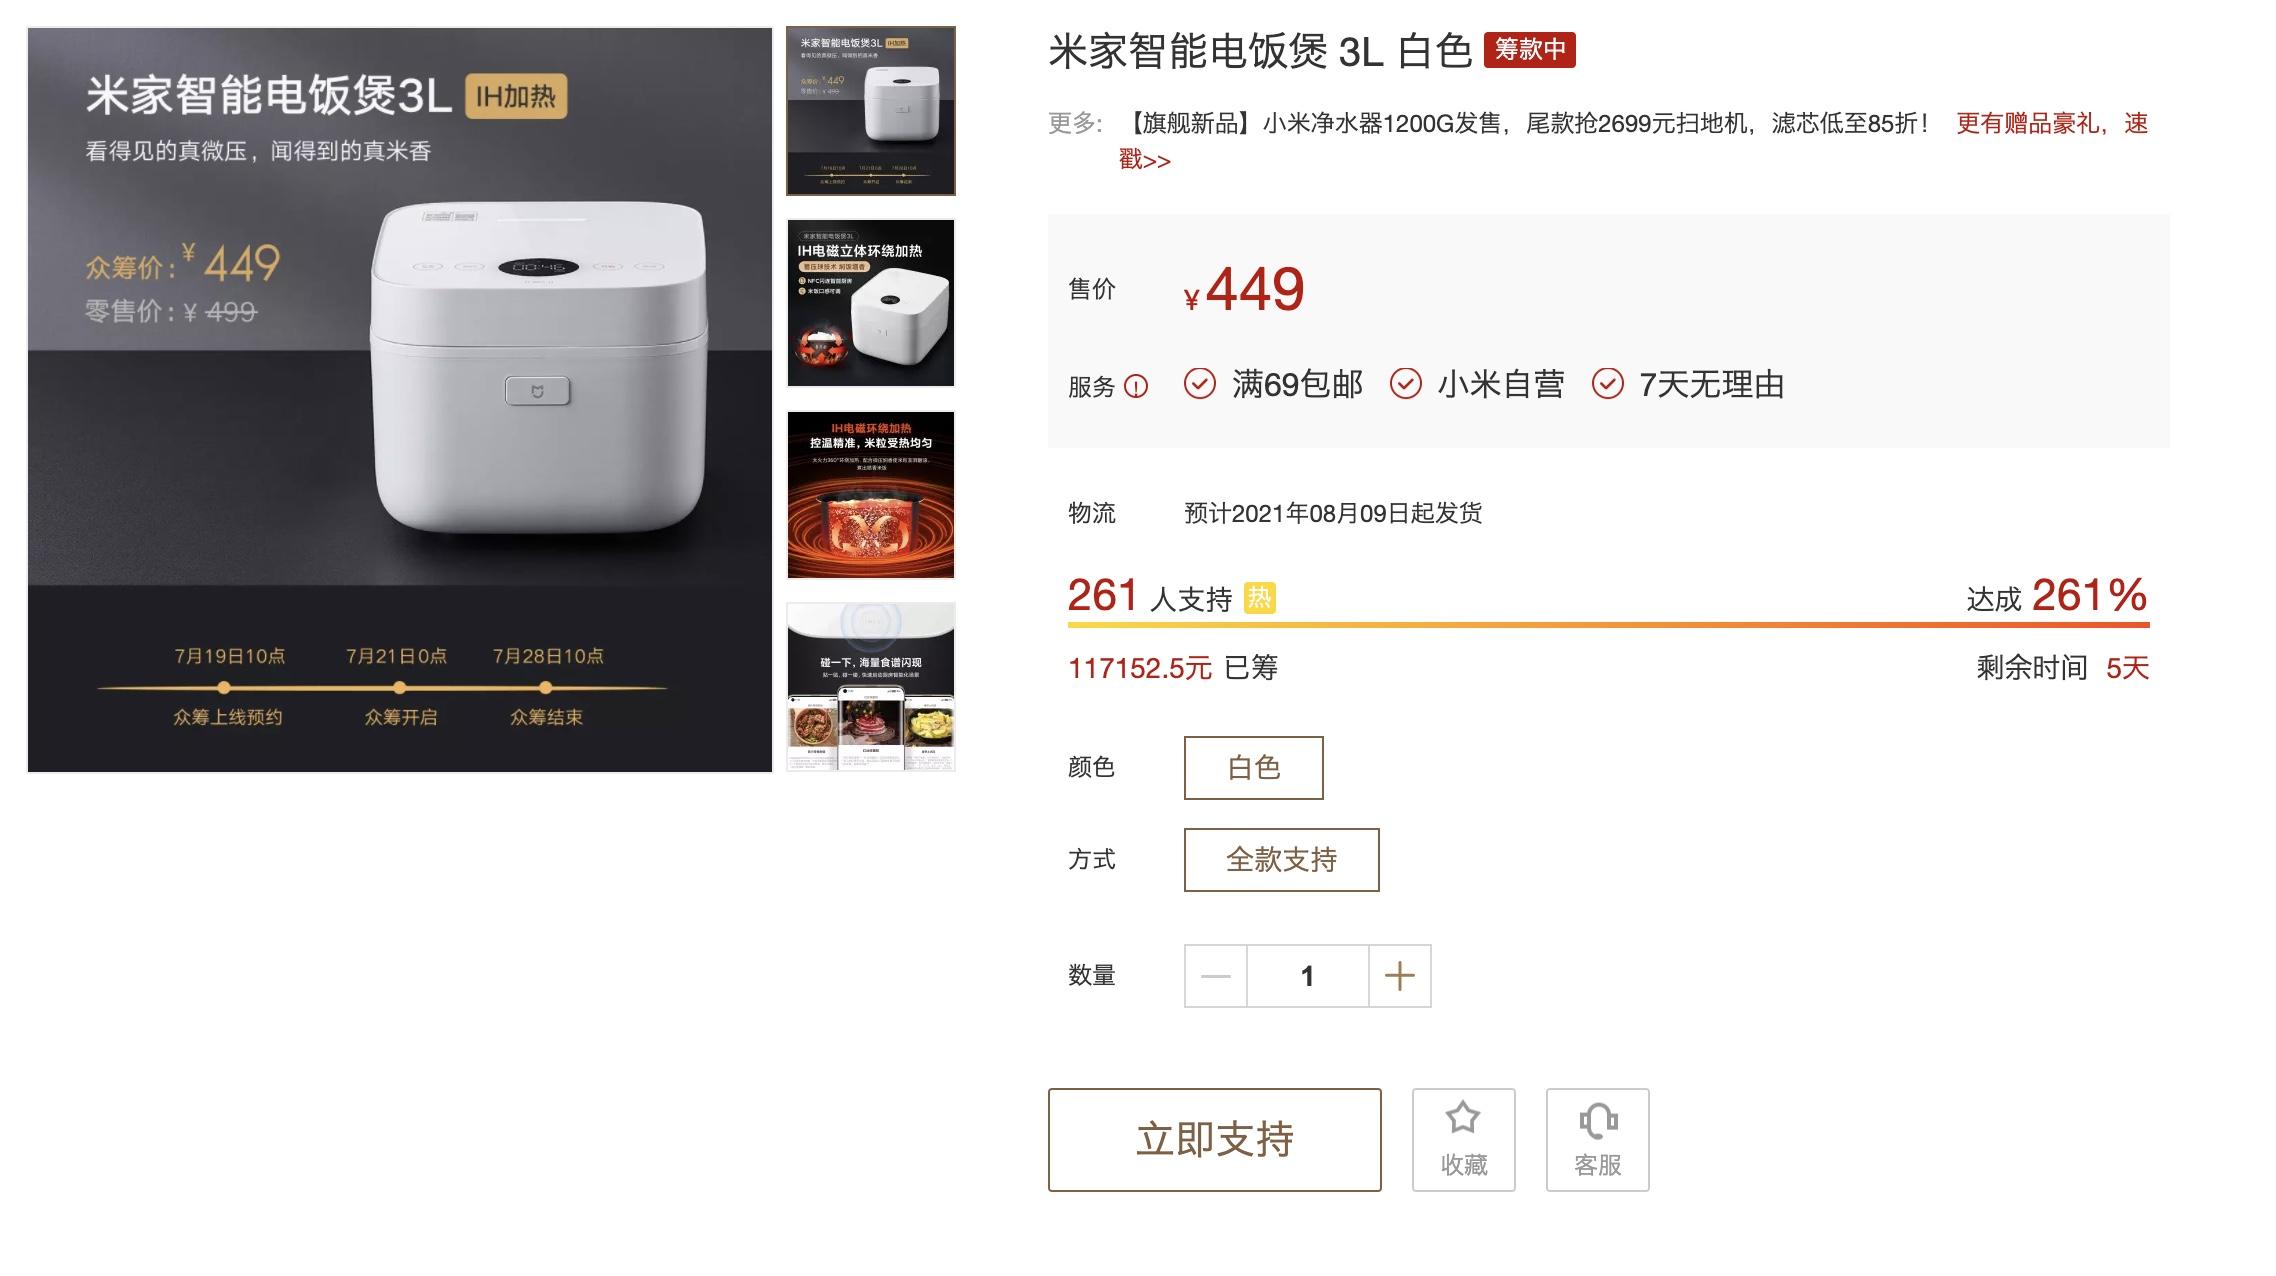 Xiaomi rice cooker